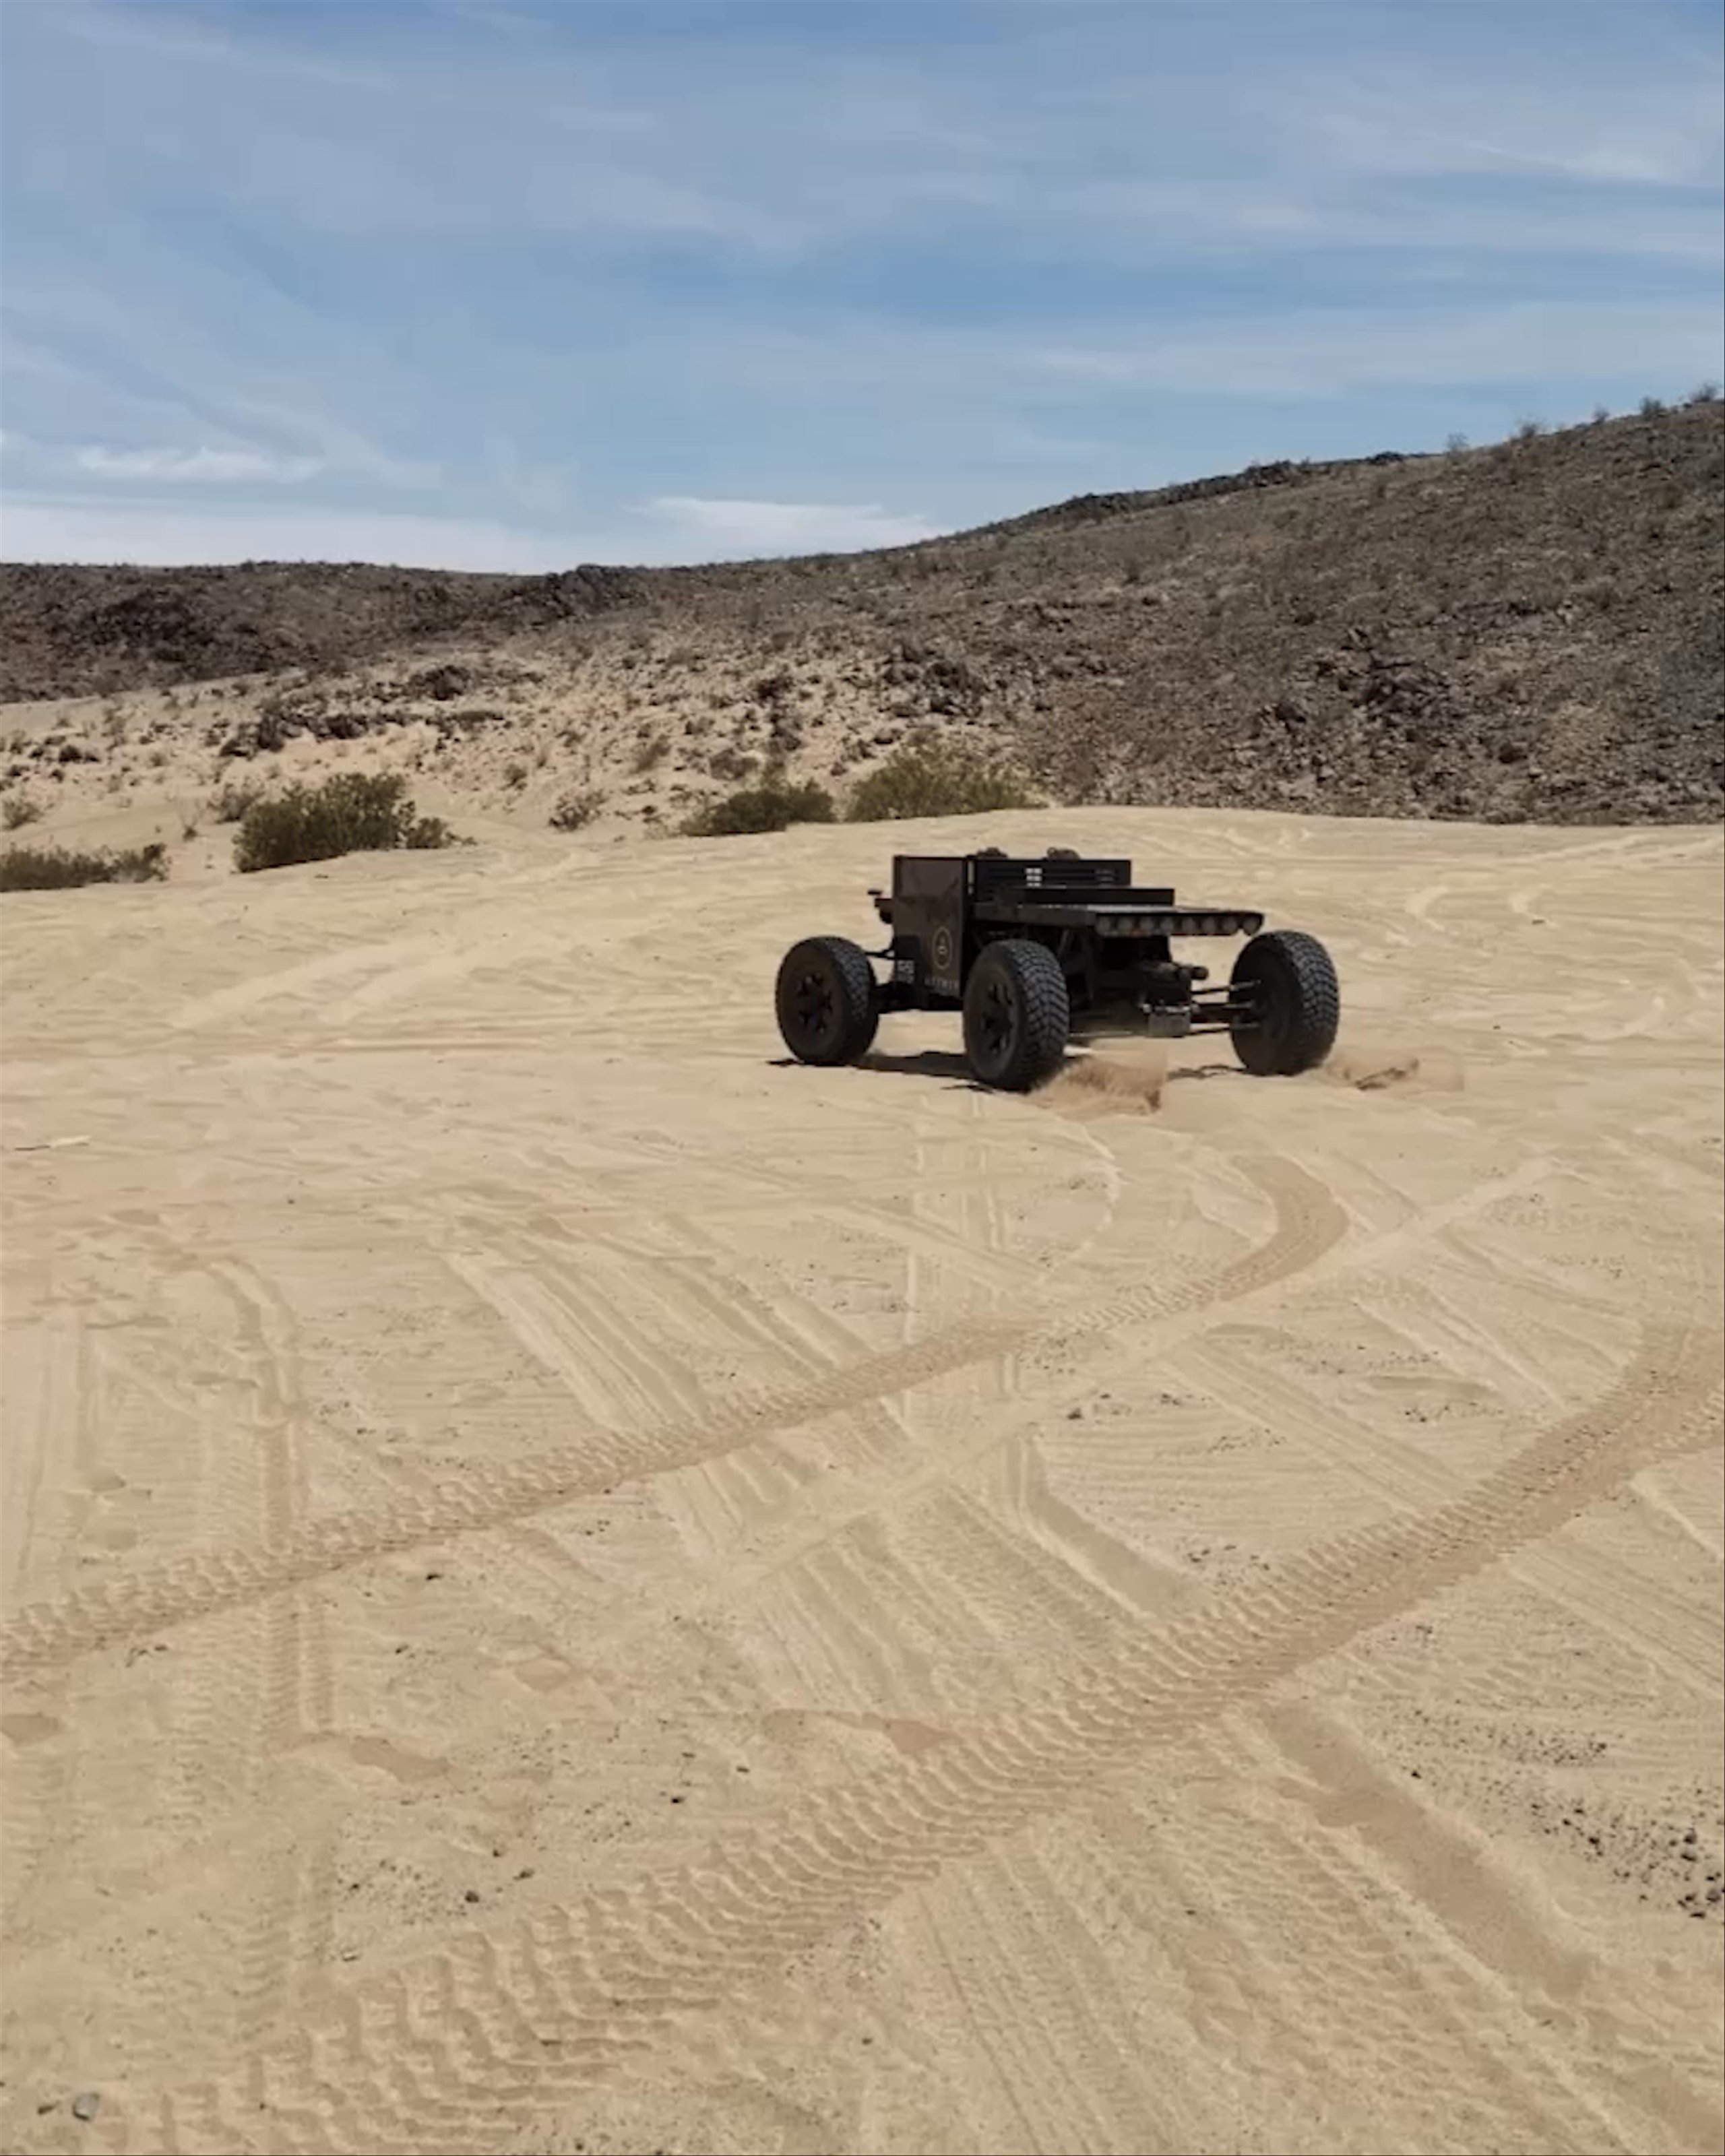 Video of custom black vehicle driving through desert landscape